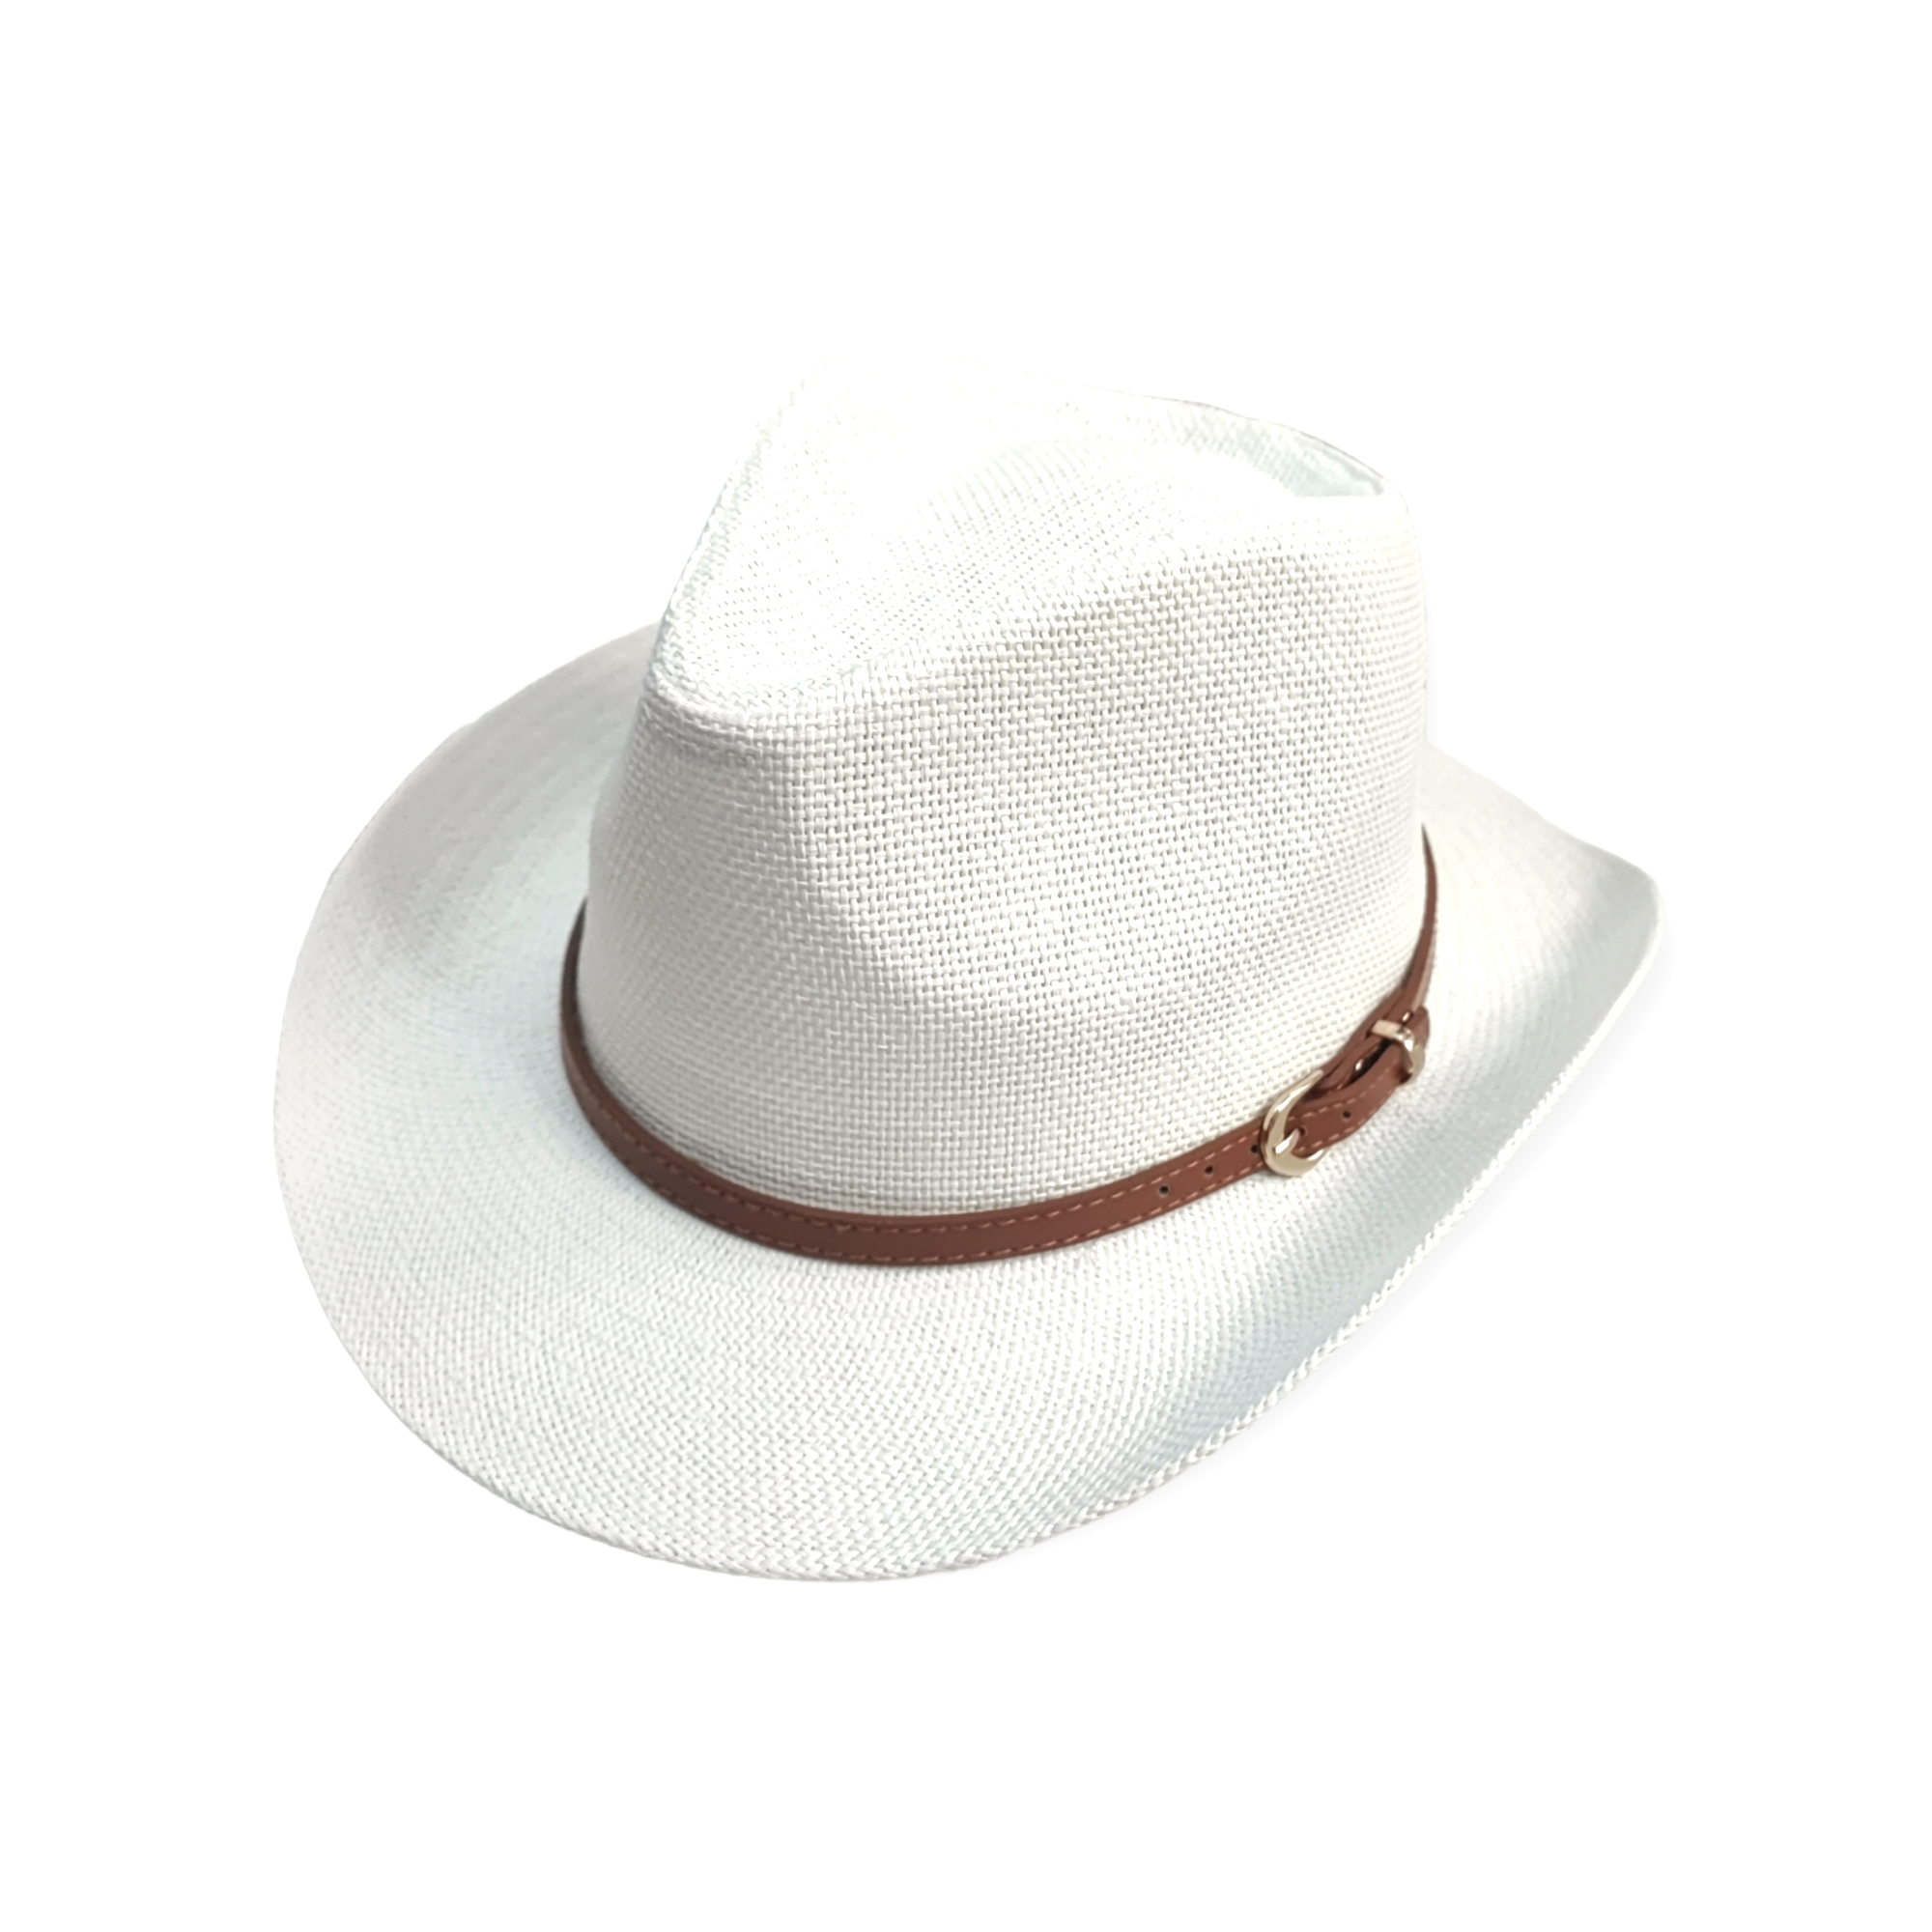 Cowboy hat with belt (x12)